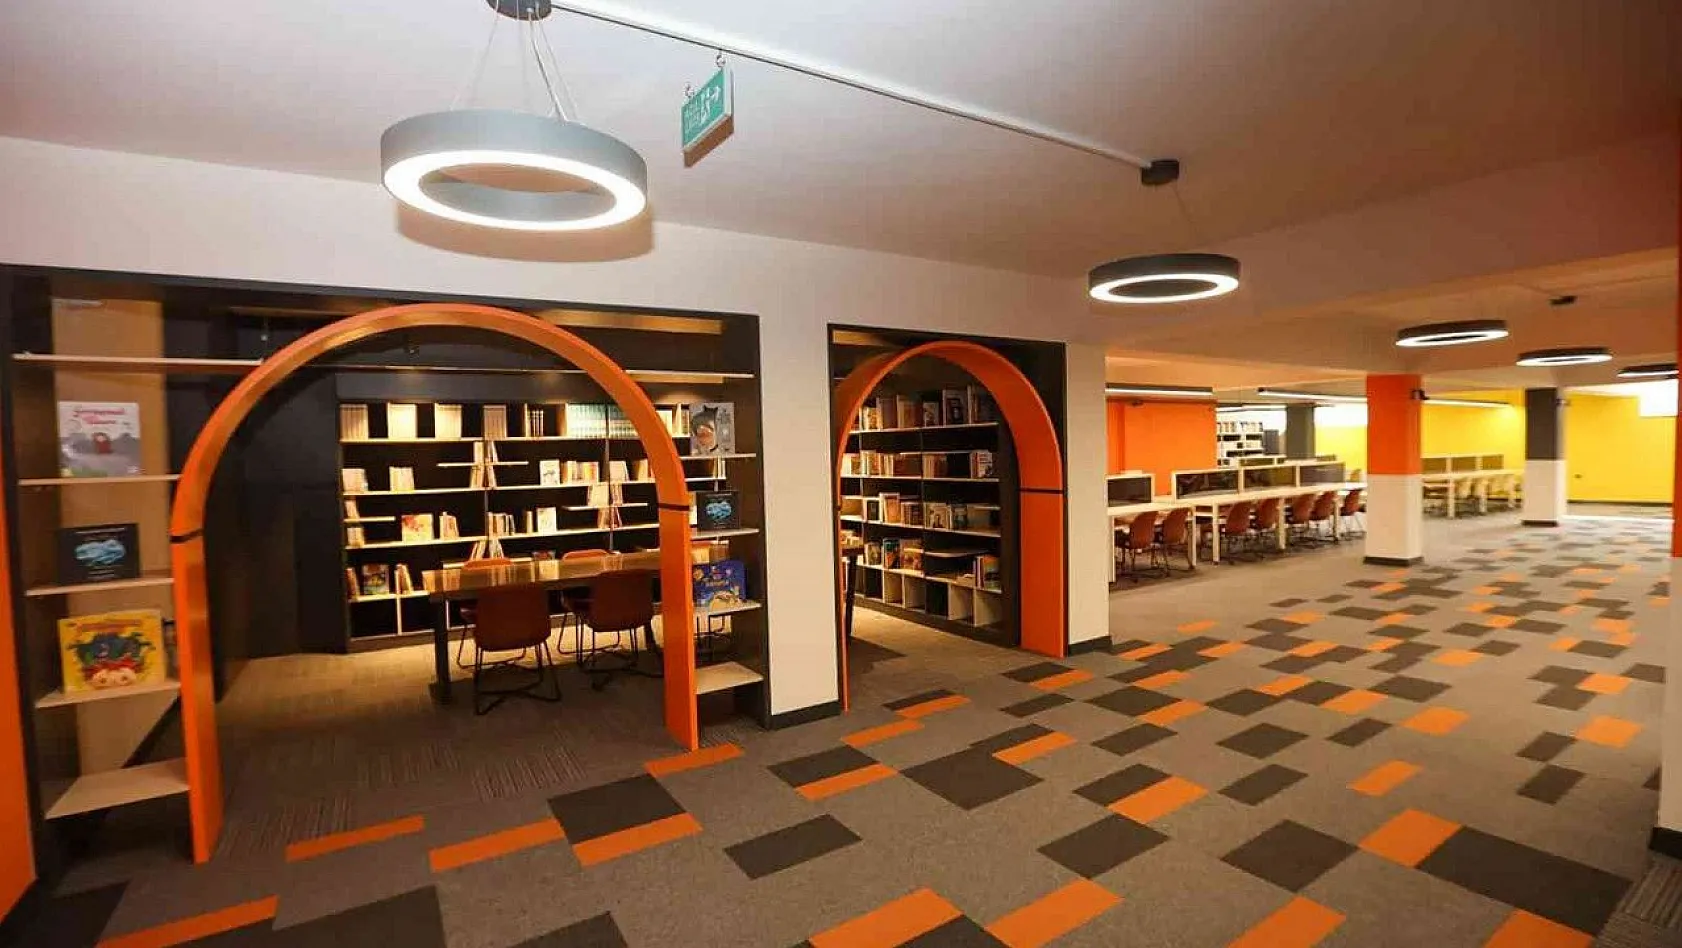 Talas'a Yeni Bir Kütüphane Daha